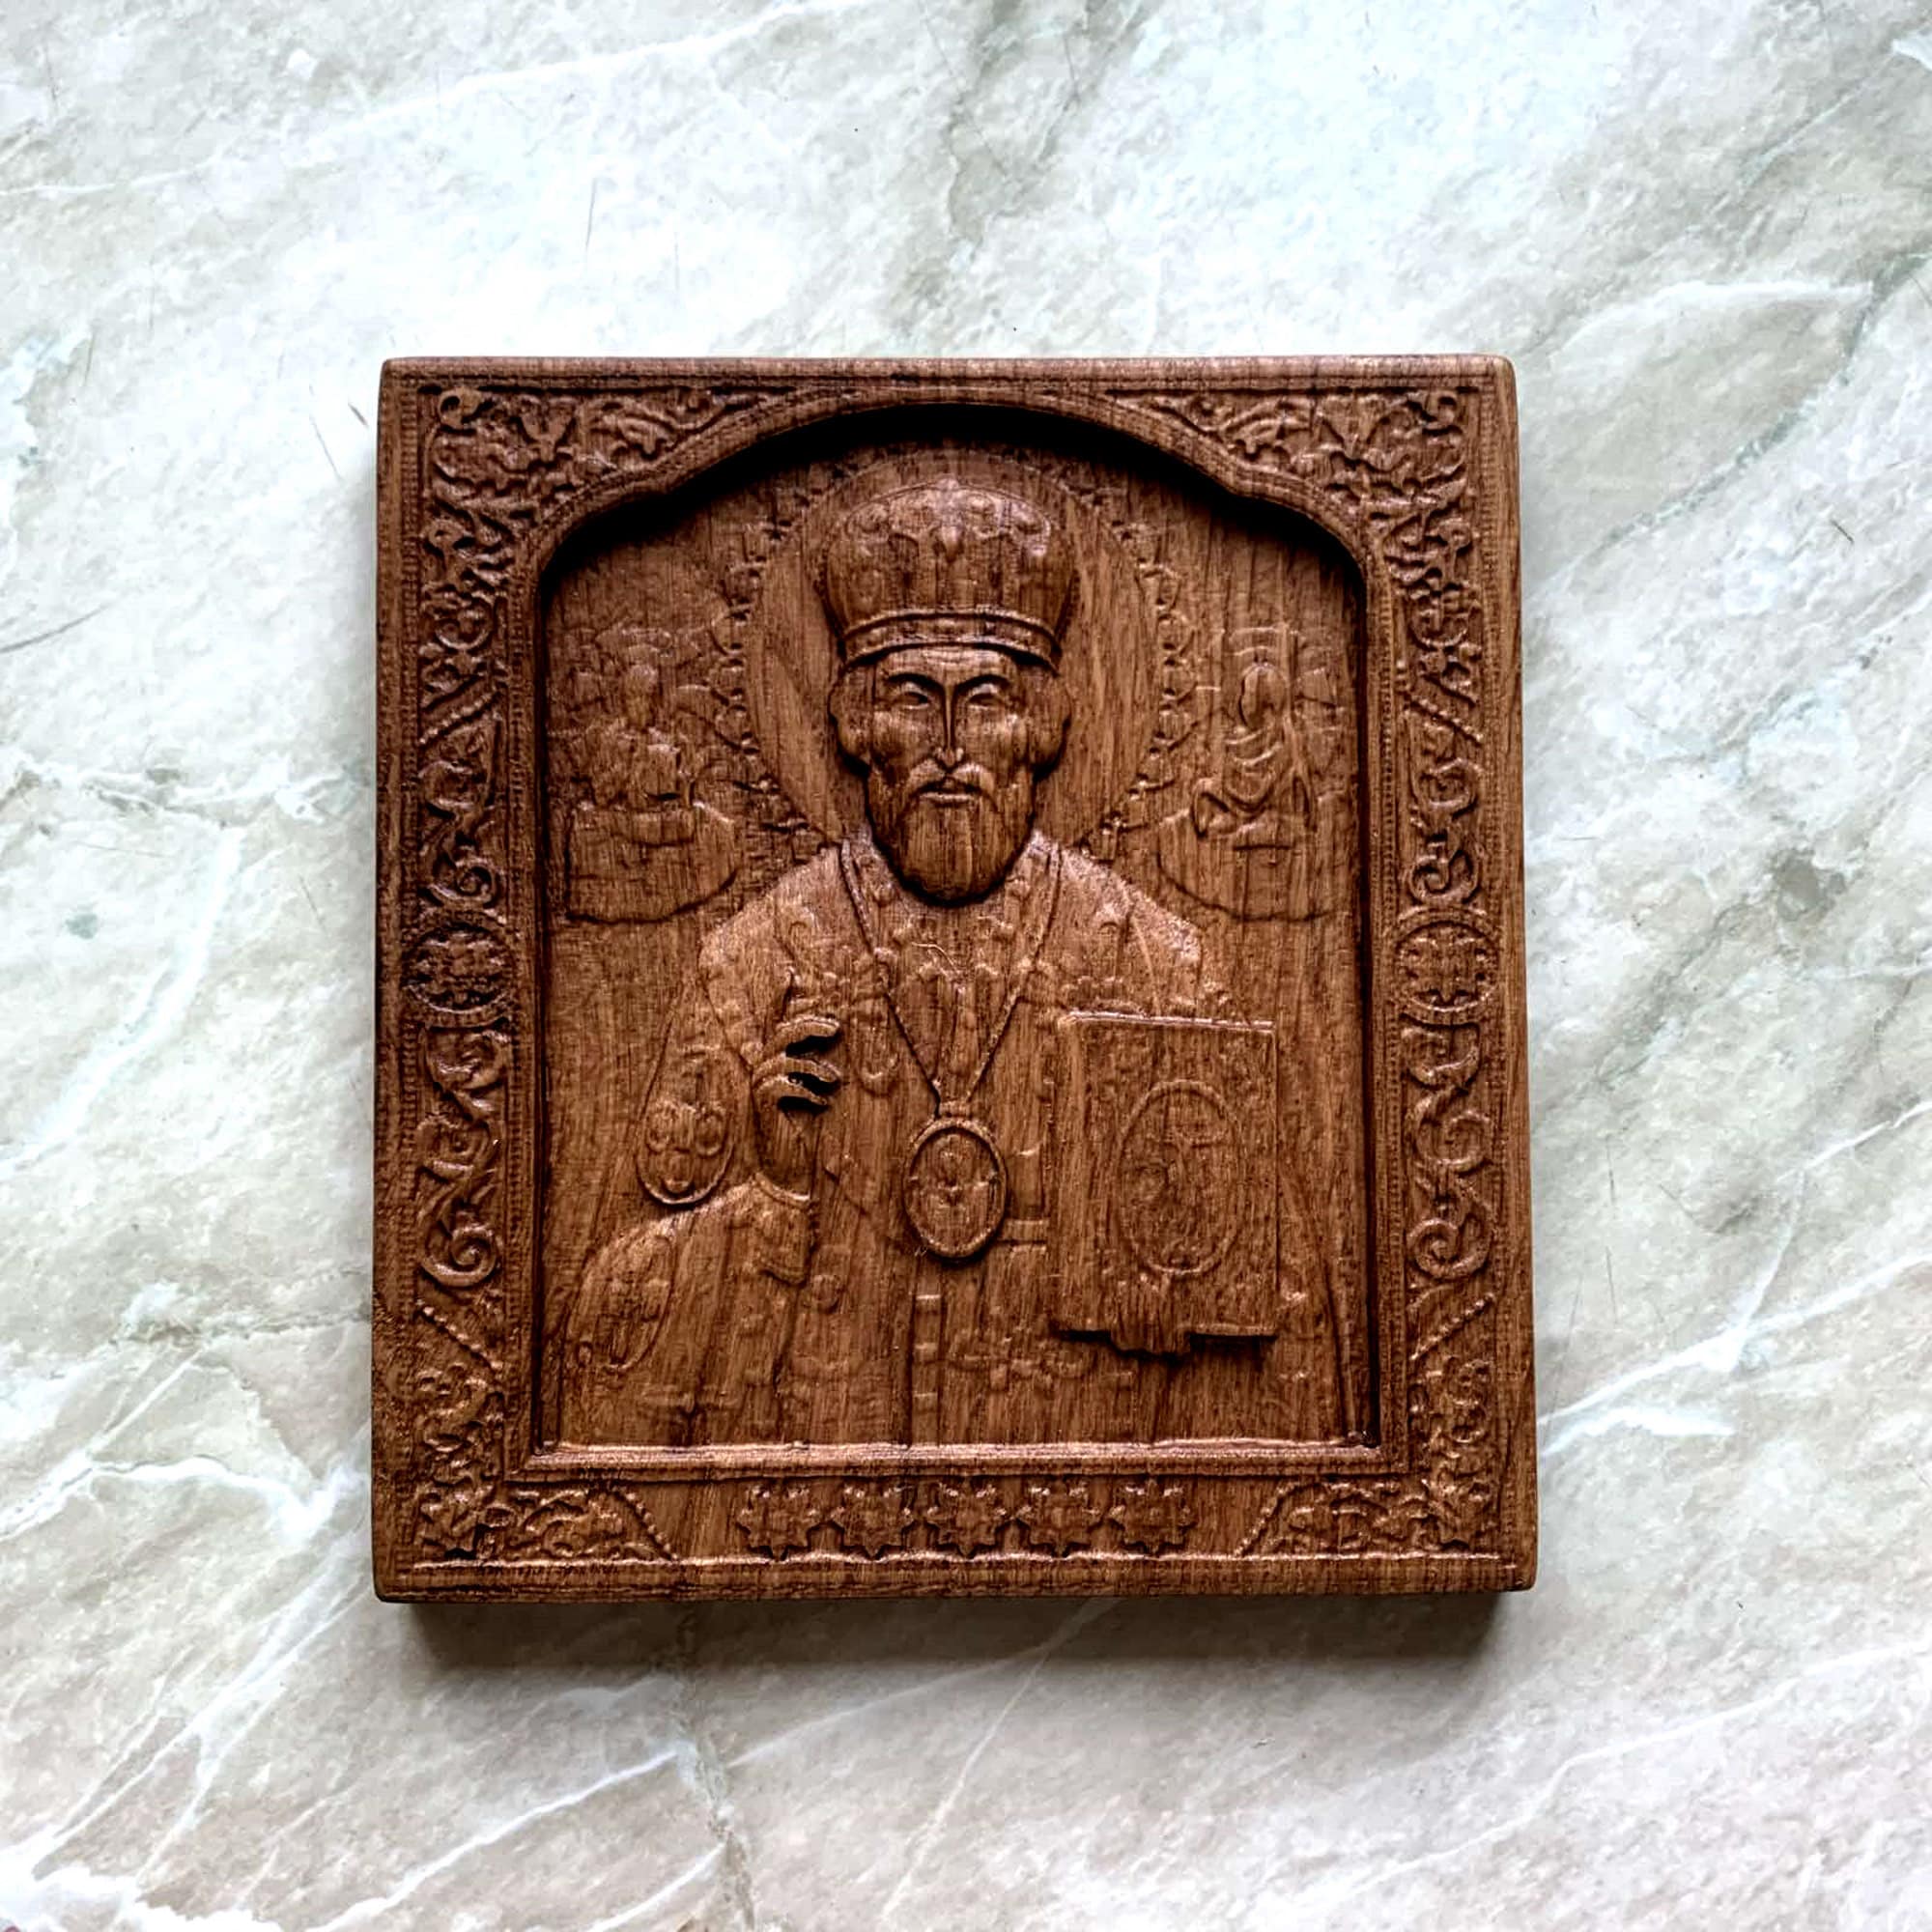 St. Christopher, Male saints, wood carving, 85 cm, Colored, acquisto  sculture in legno